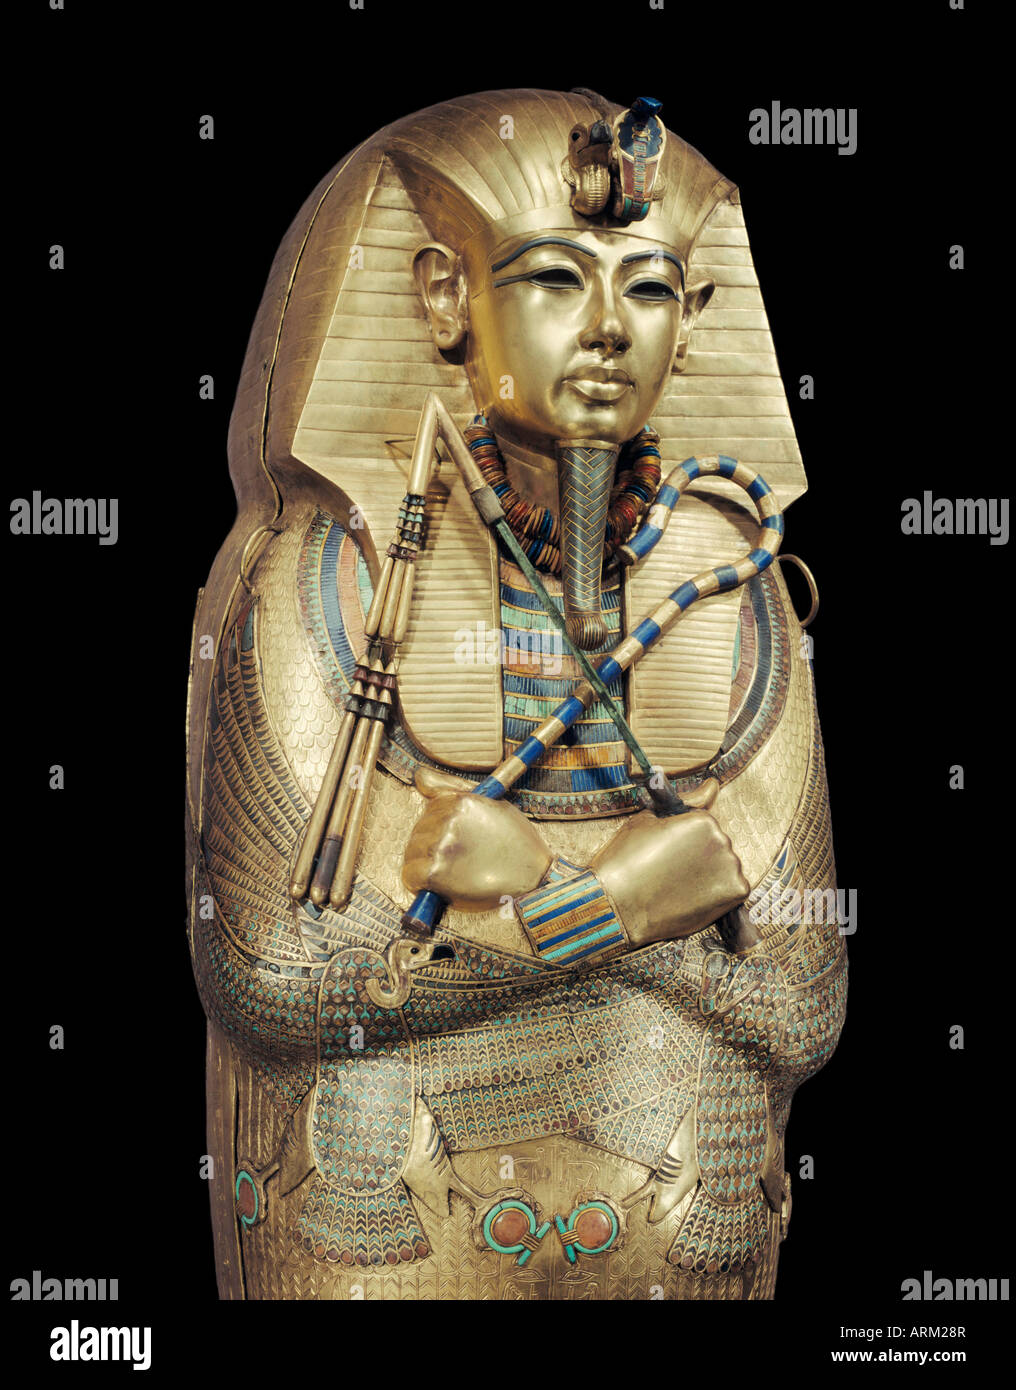 Mummiform coffin of gold with inlaid semi-precious stones, from the tomb of the pharoah Tutankhamun Stock Photo